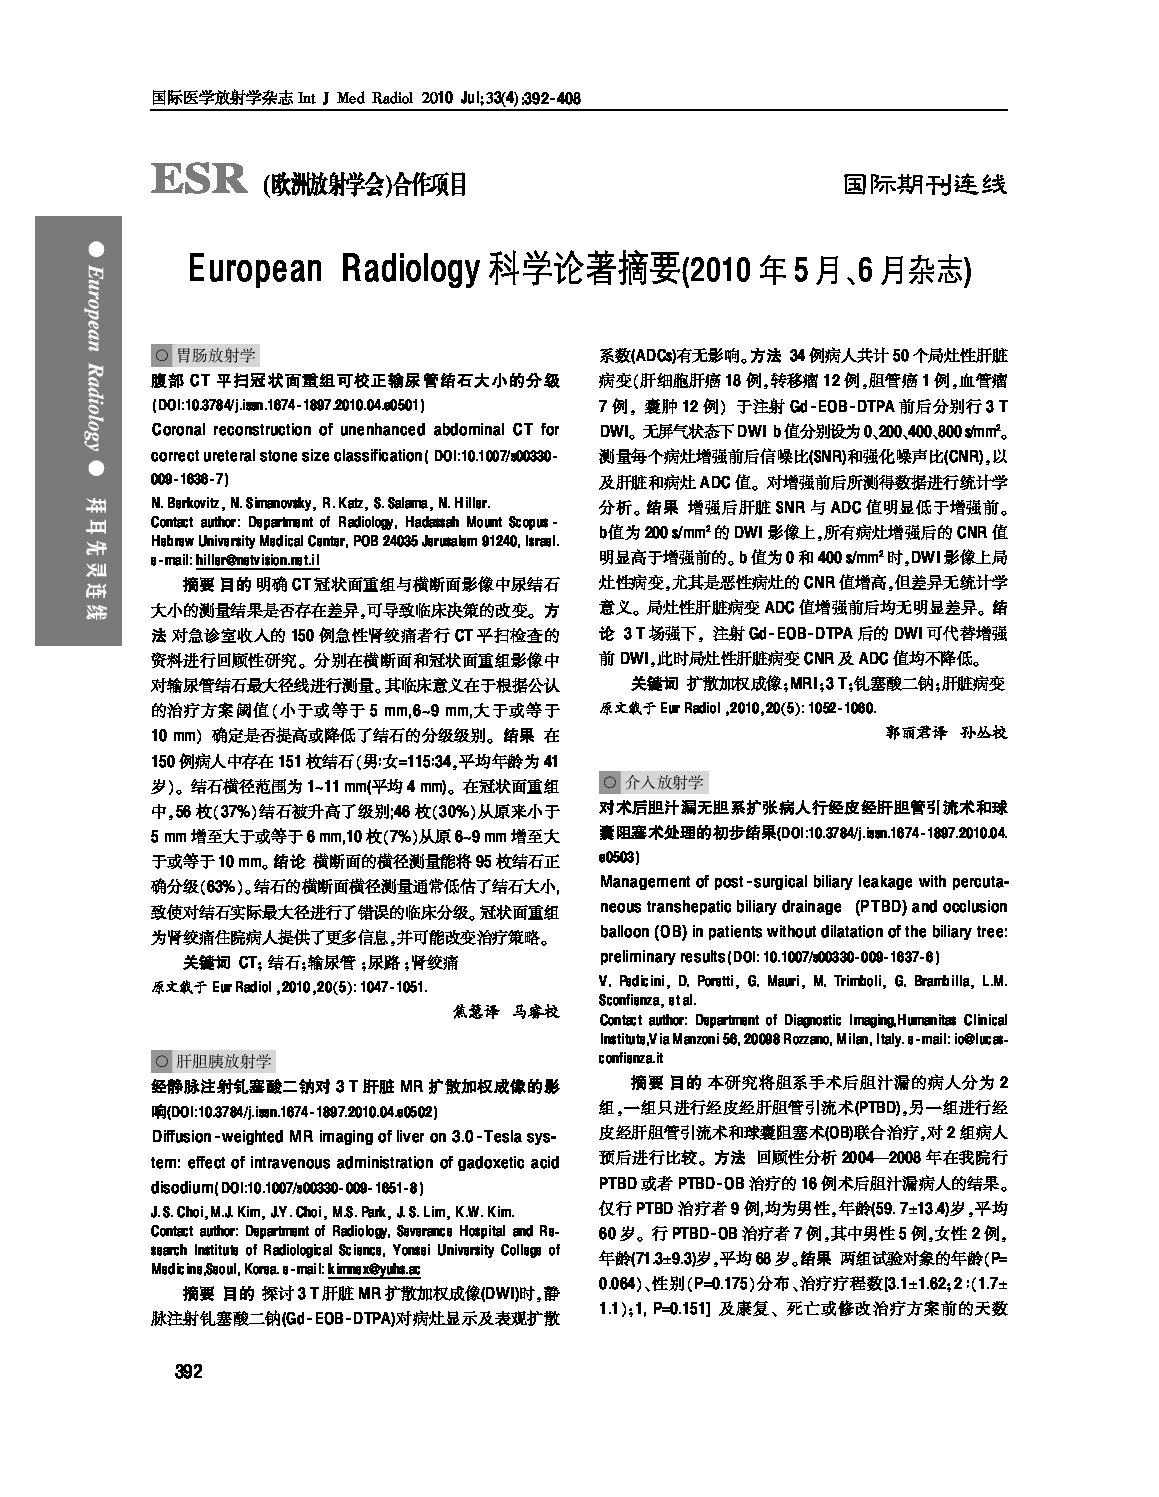 European Radiology Vol. 2010, May-June (1.4MB)